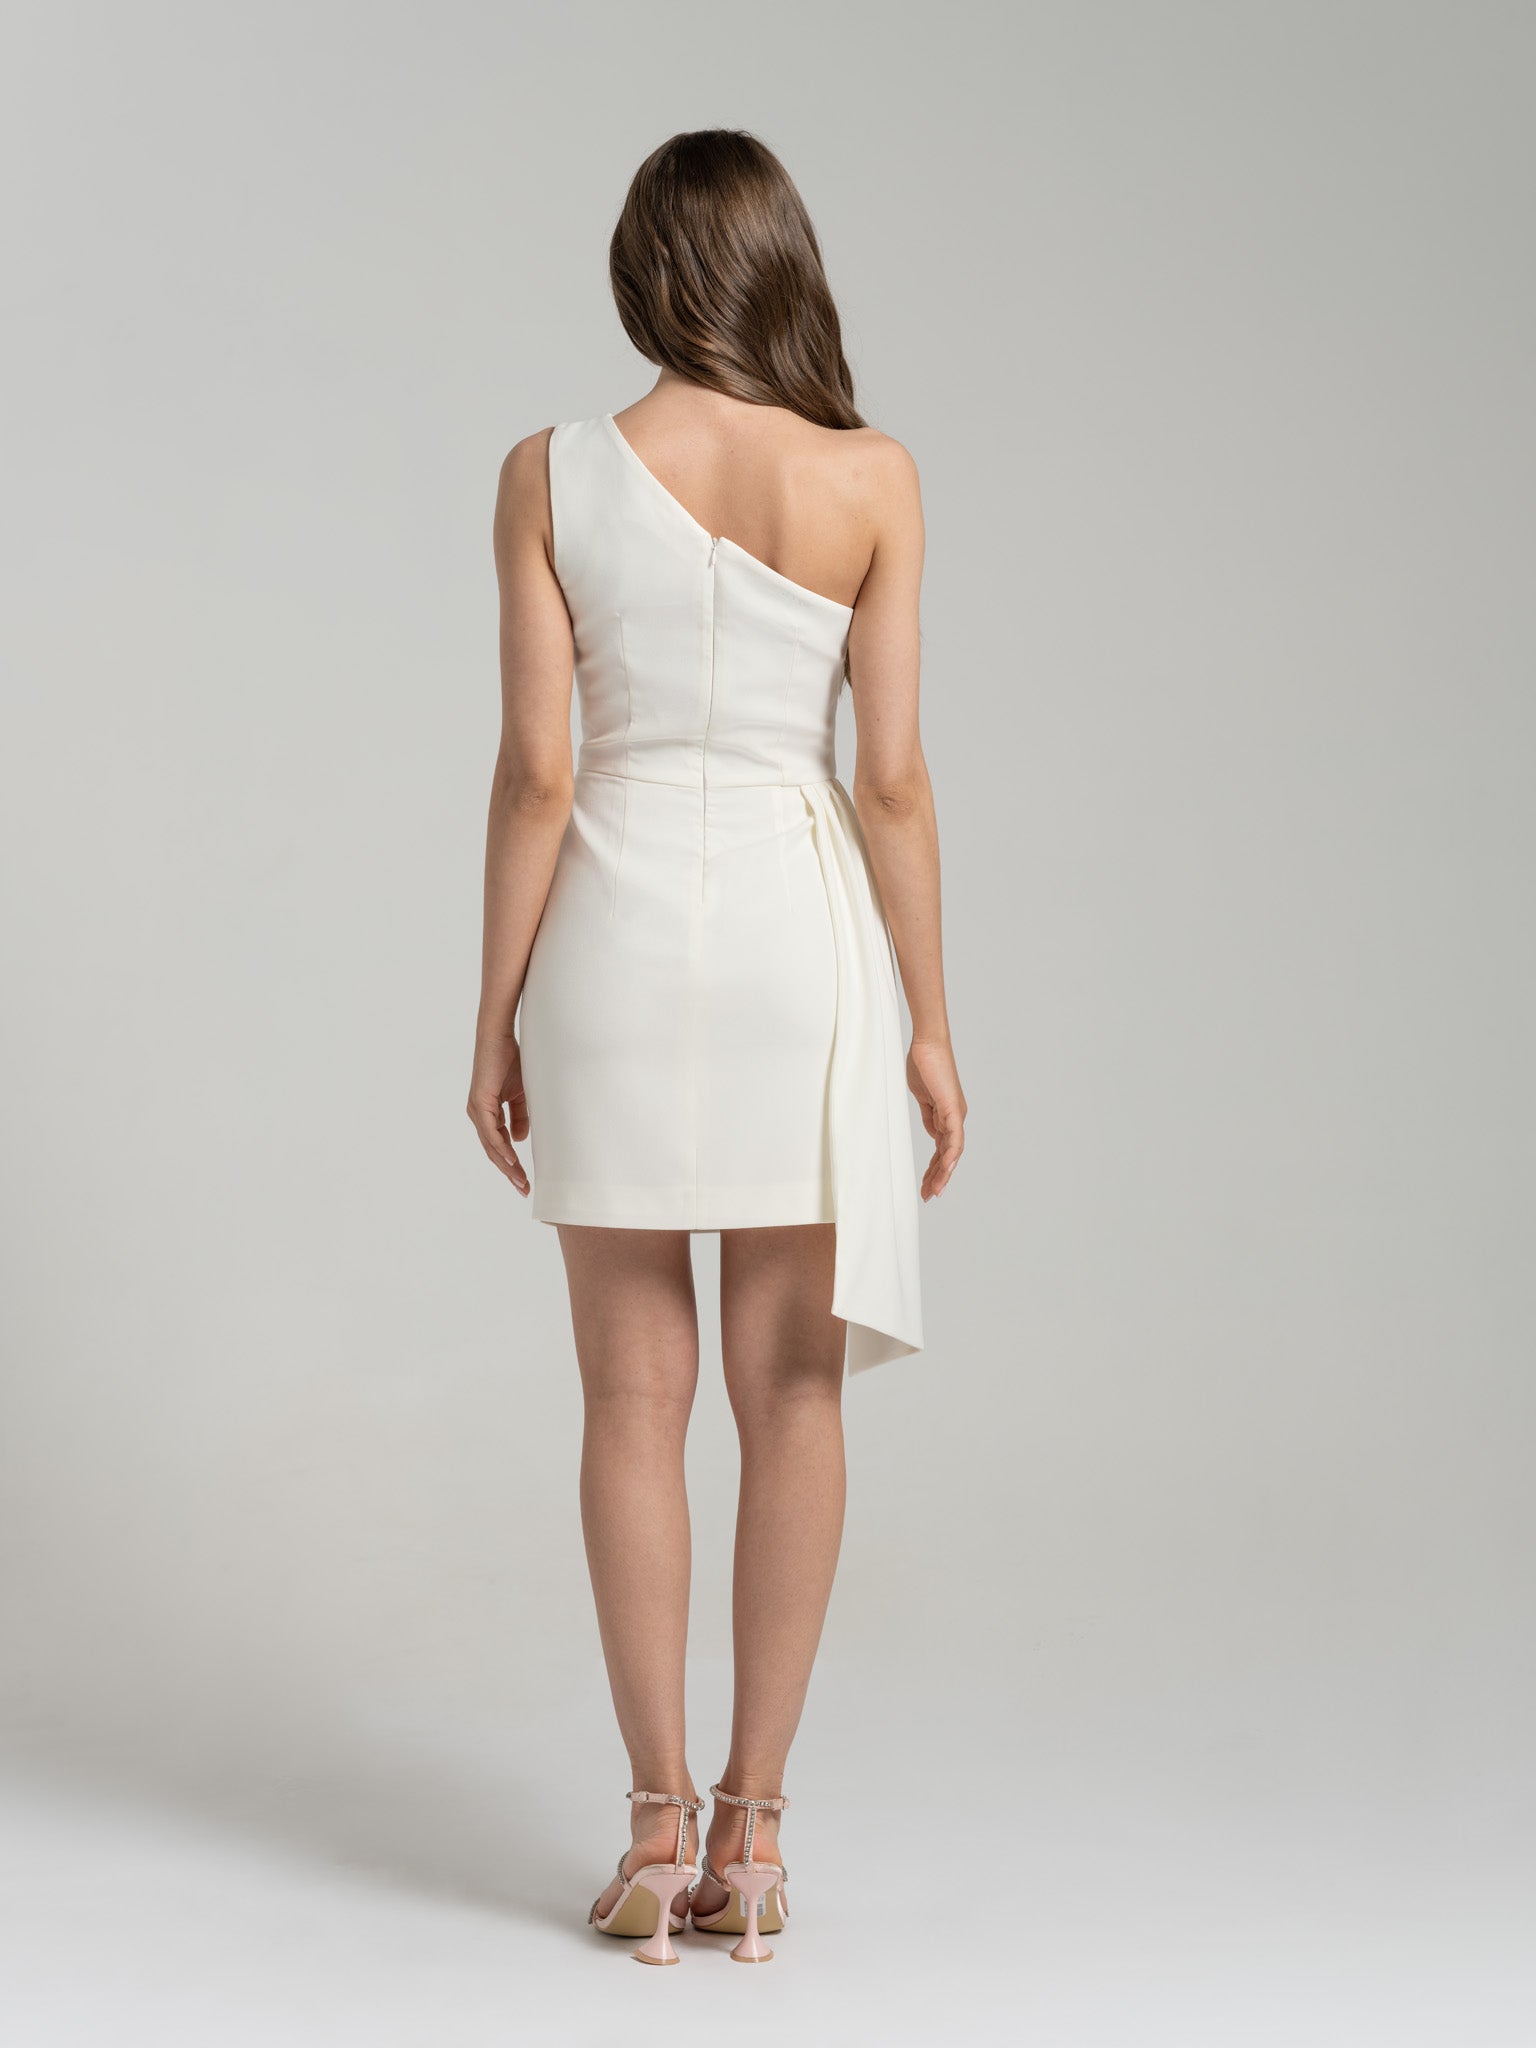 Iconic Glamour Short Dress - Pearl White by Tia Dorraine Women's Luxury Fashion Designer Clothing Brand